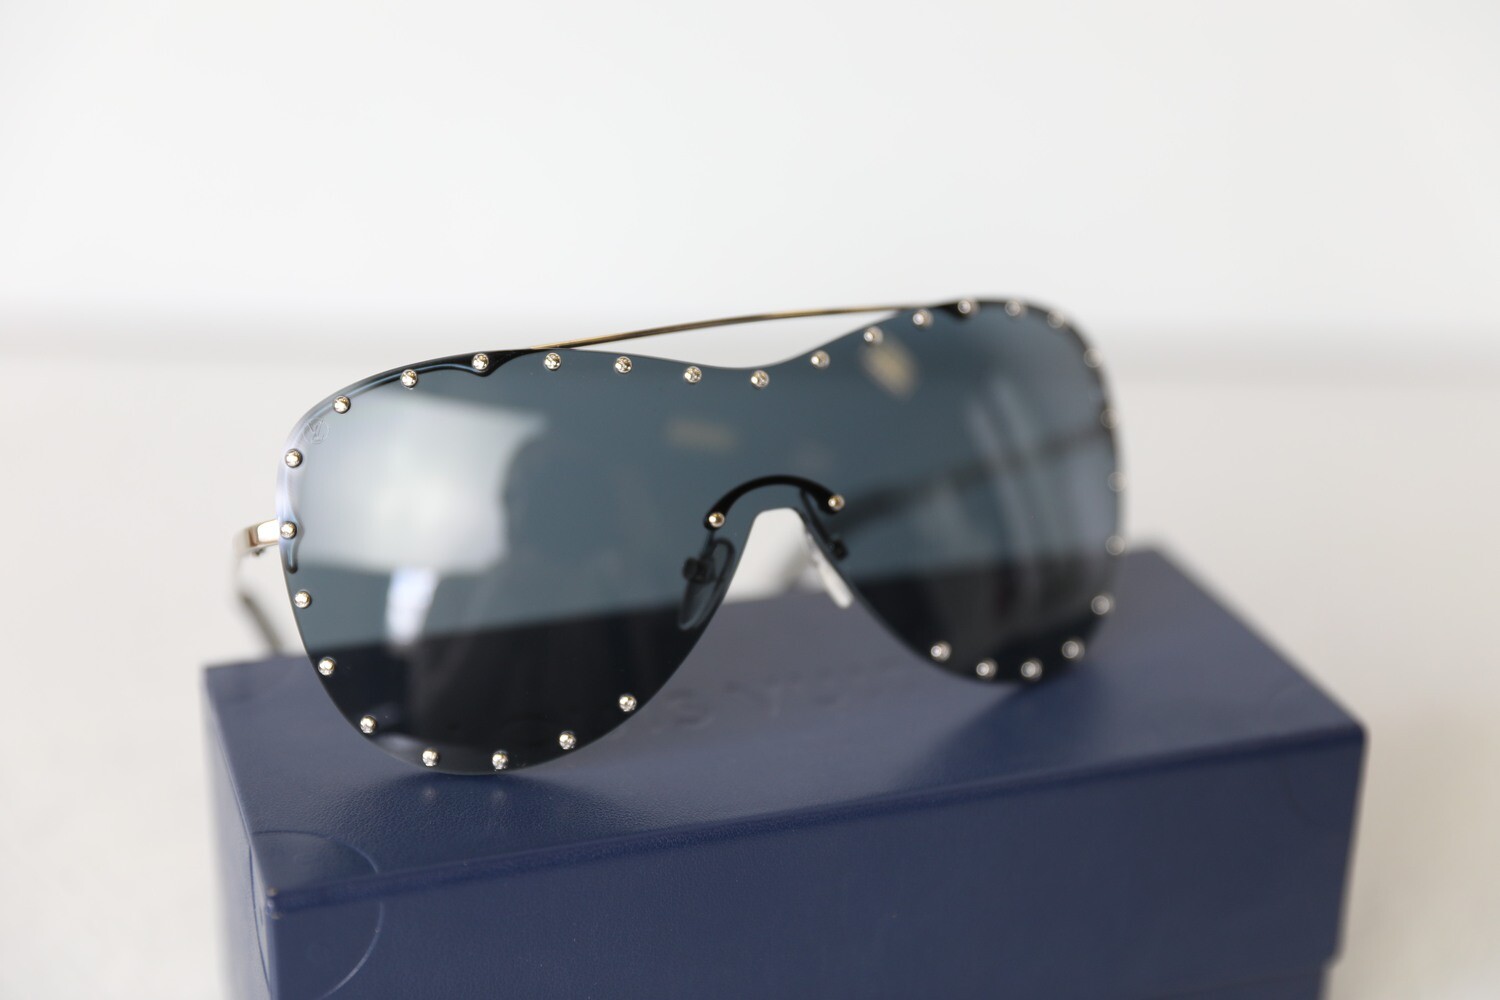 Louis Vuitton The Party Aviator Sunglasses, Monogram Black And Gold,  Preowned In Box WA001 - Julia Rose Boston